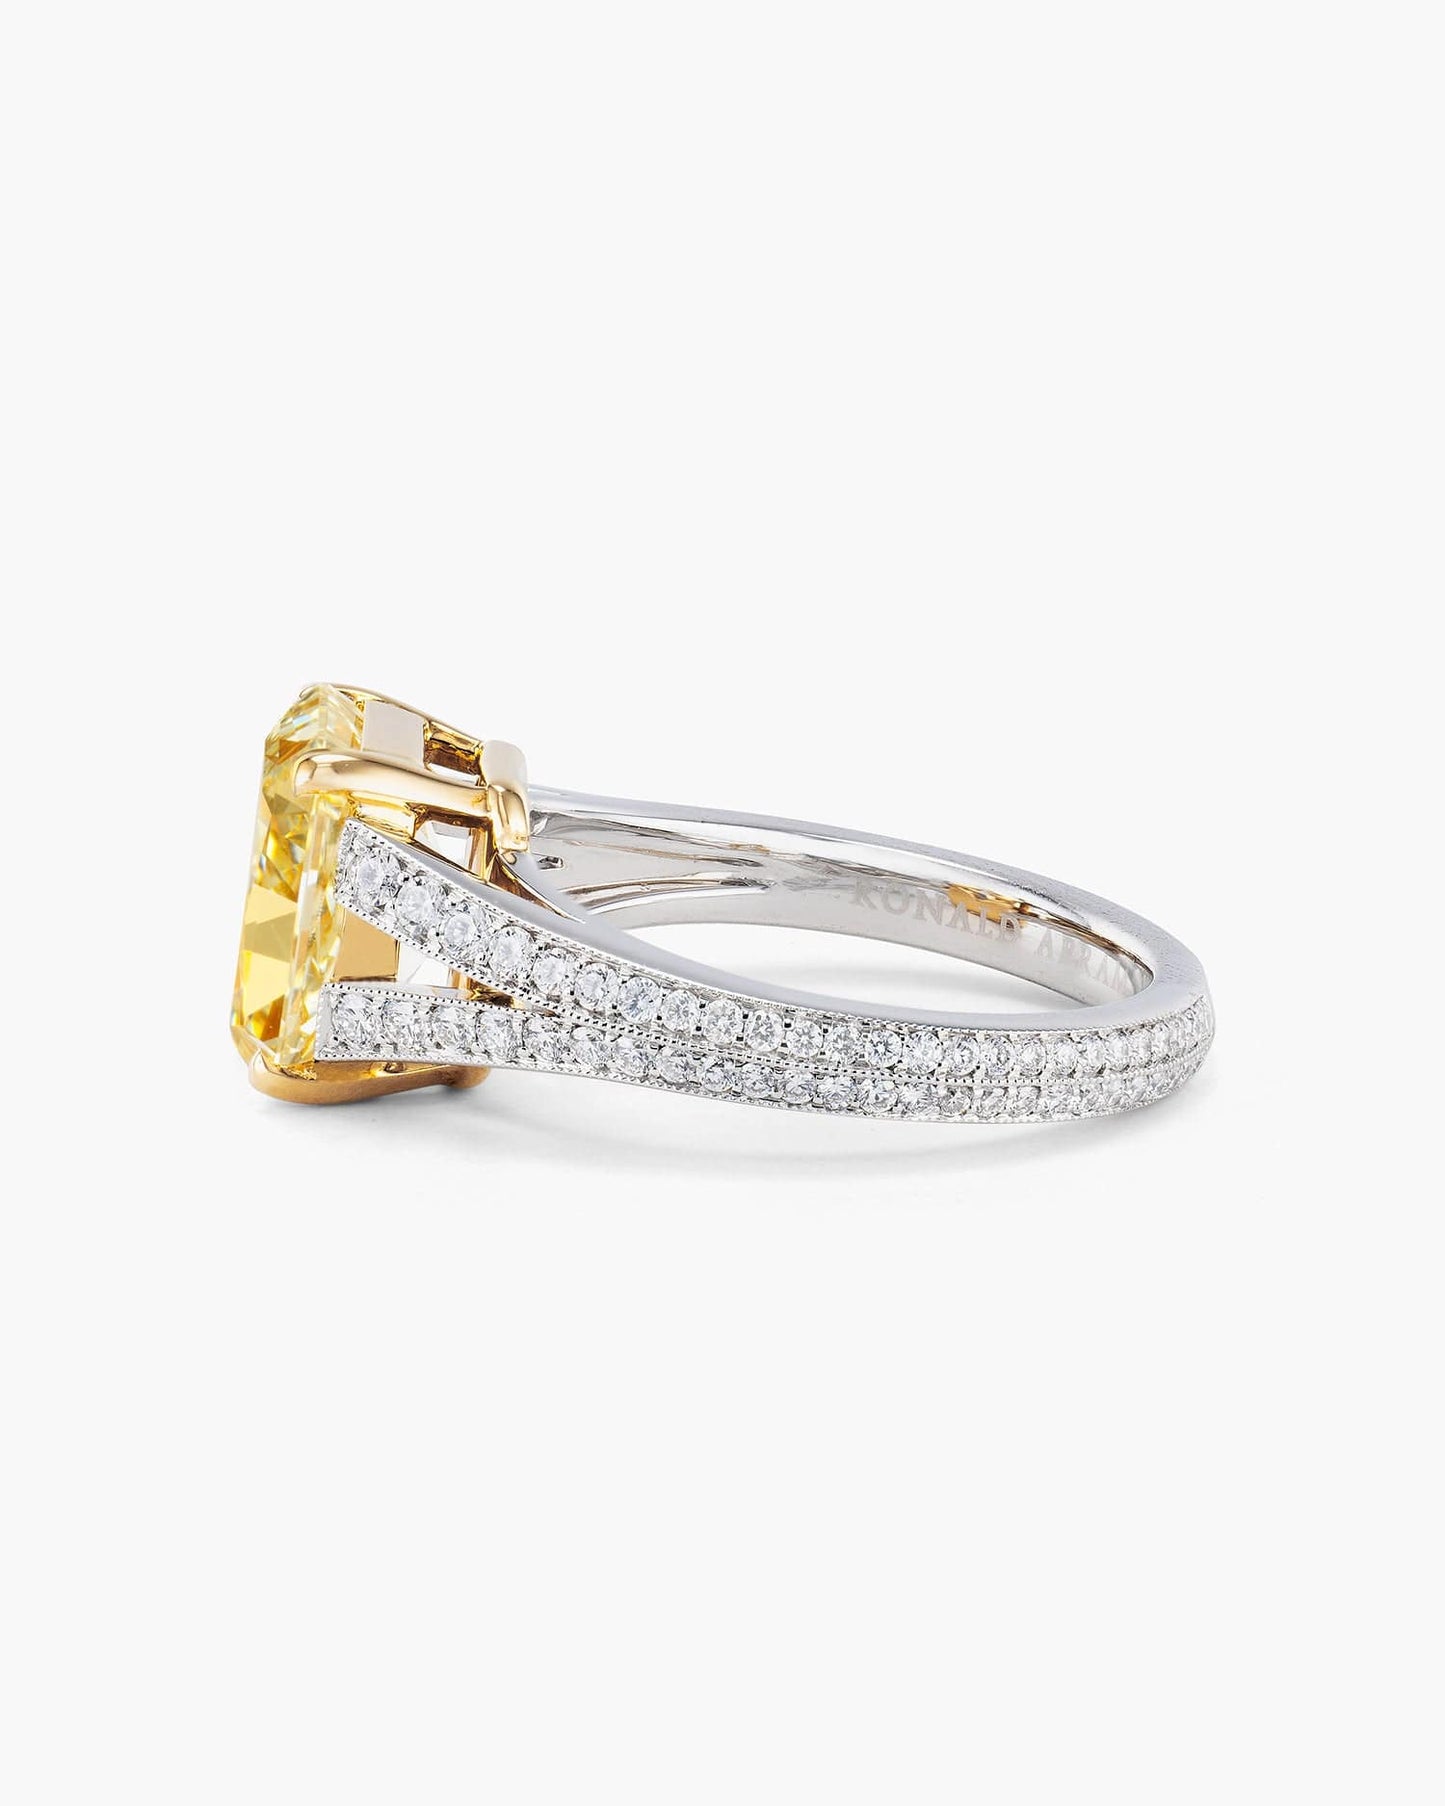 3.48 carat Radiant Cut Yellow and White Diamond Ring